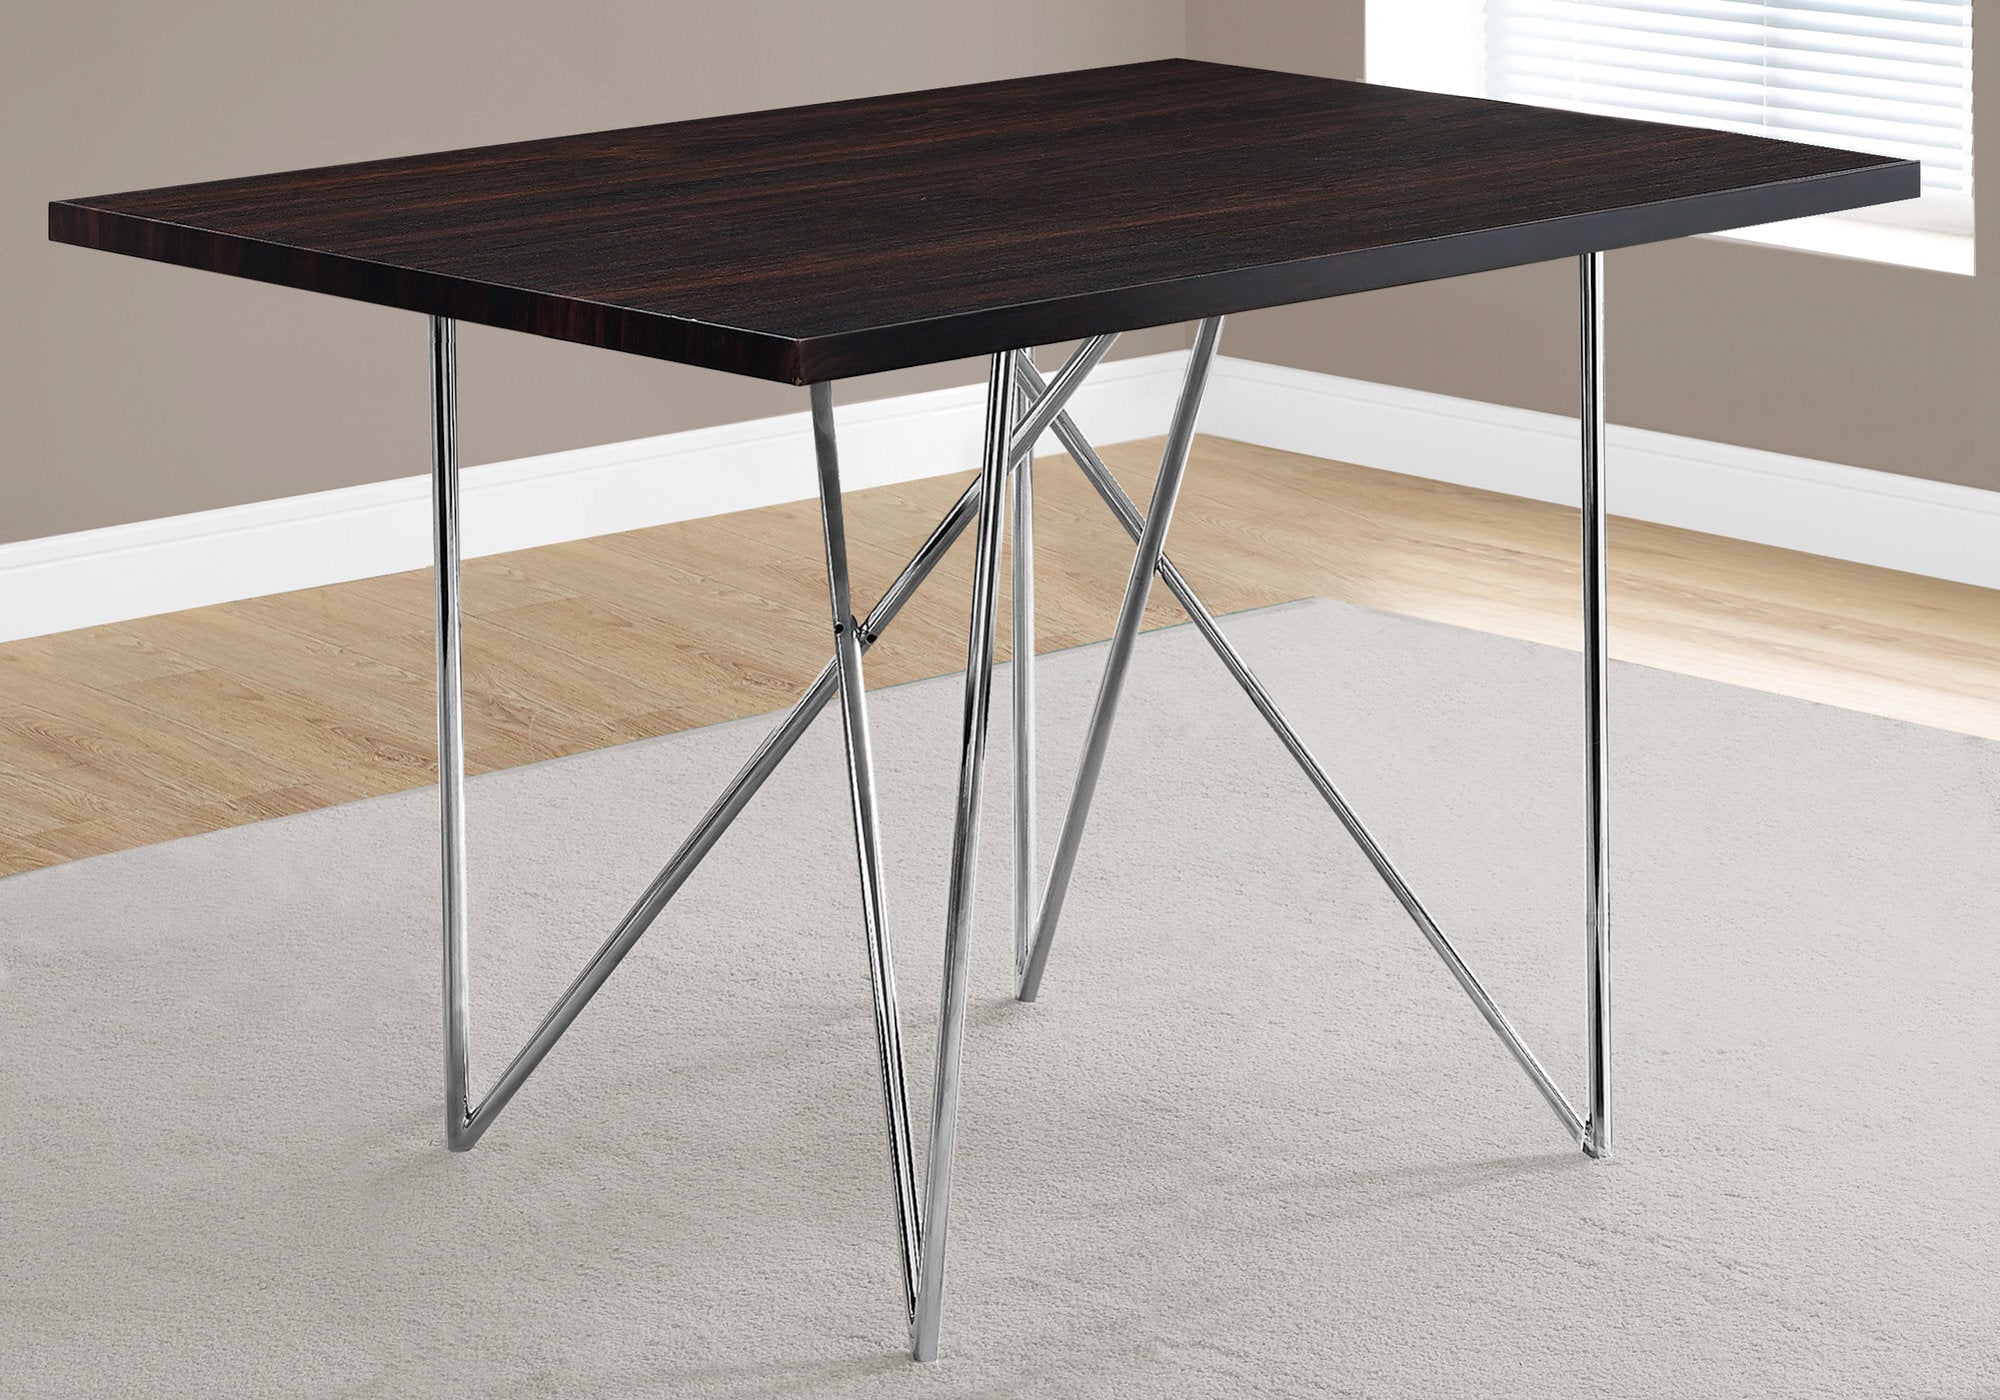 Rey 32" x 48" Modern Rectangular Dining Table With Cross Metal Legs (Espresso)